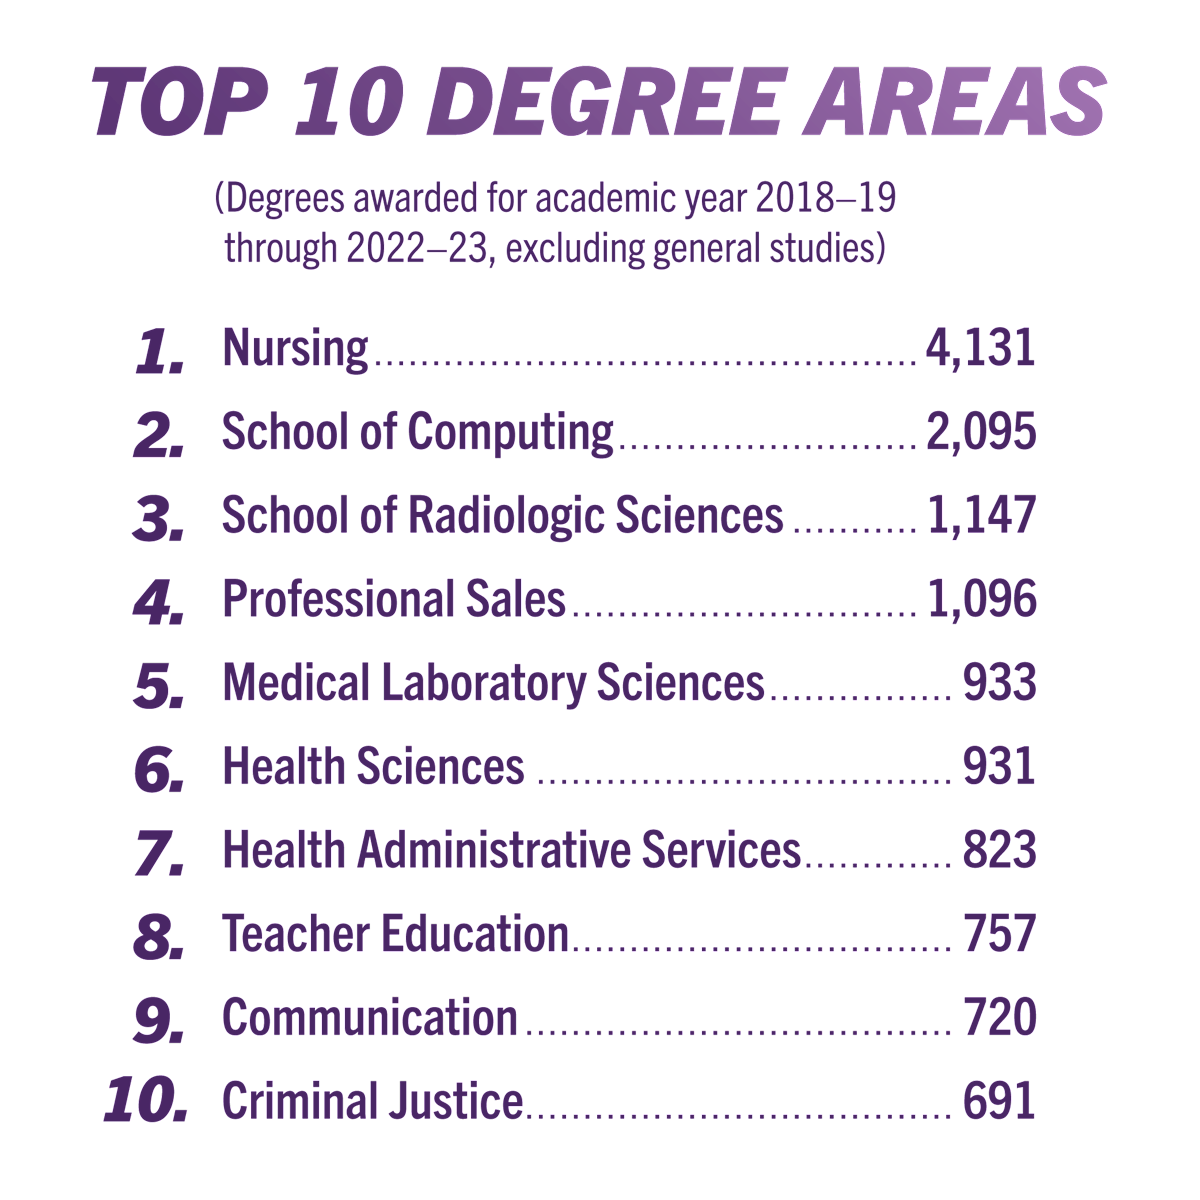 Top 5 Degree Areas: Nursing School of Computing, School of Radiologic Sciences, Professional Sales, Medical Laboratory Sciences